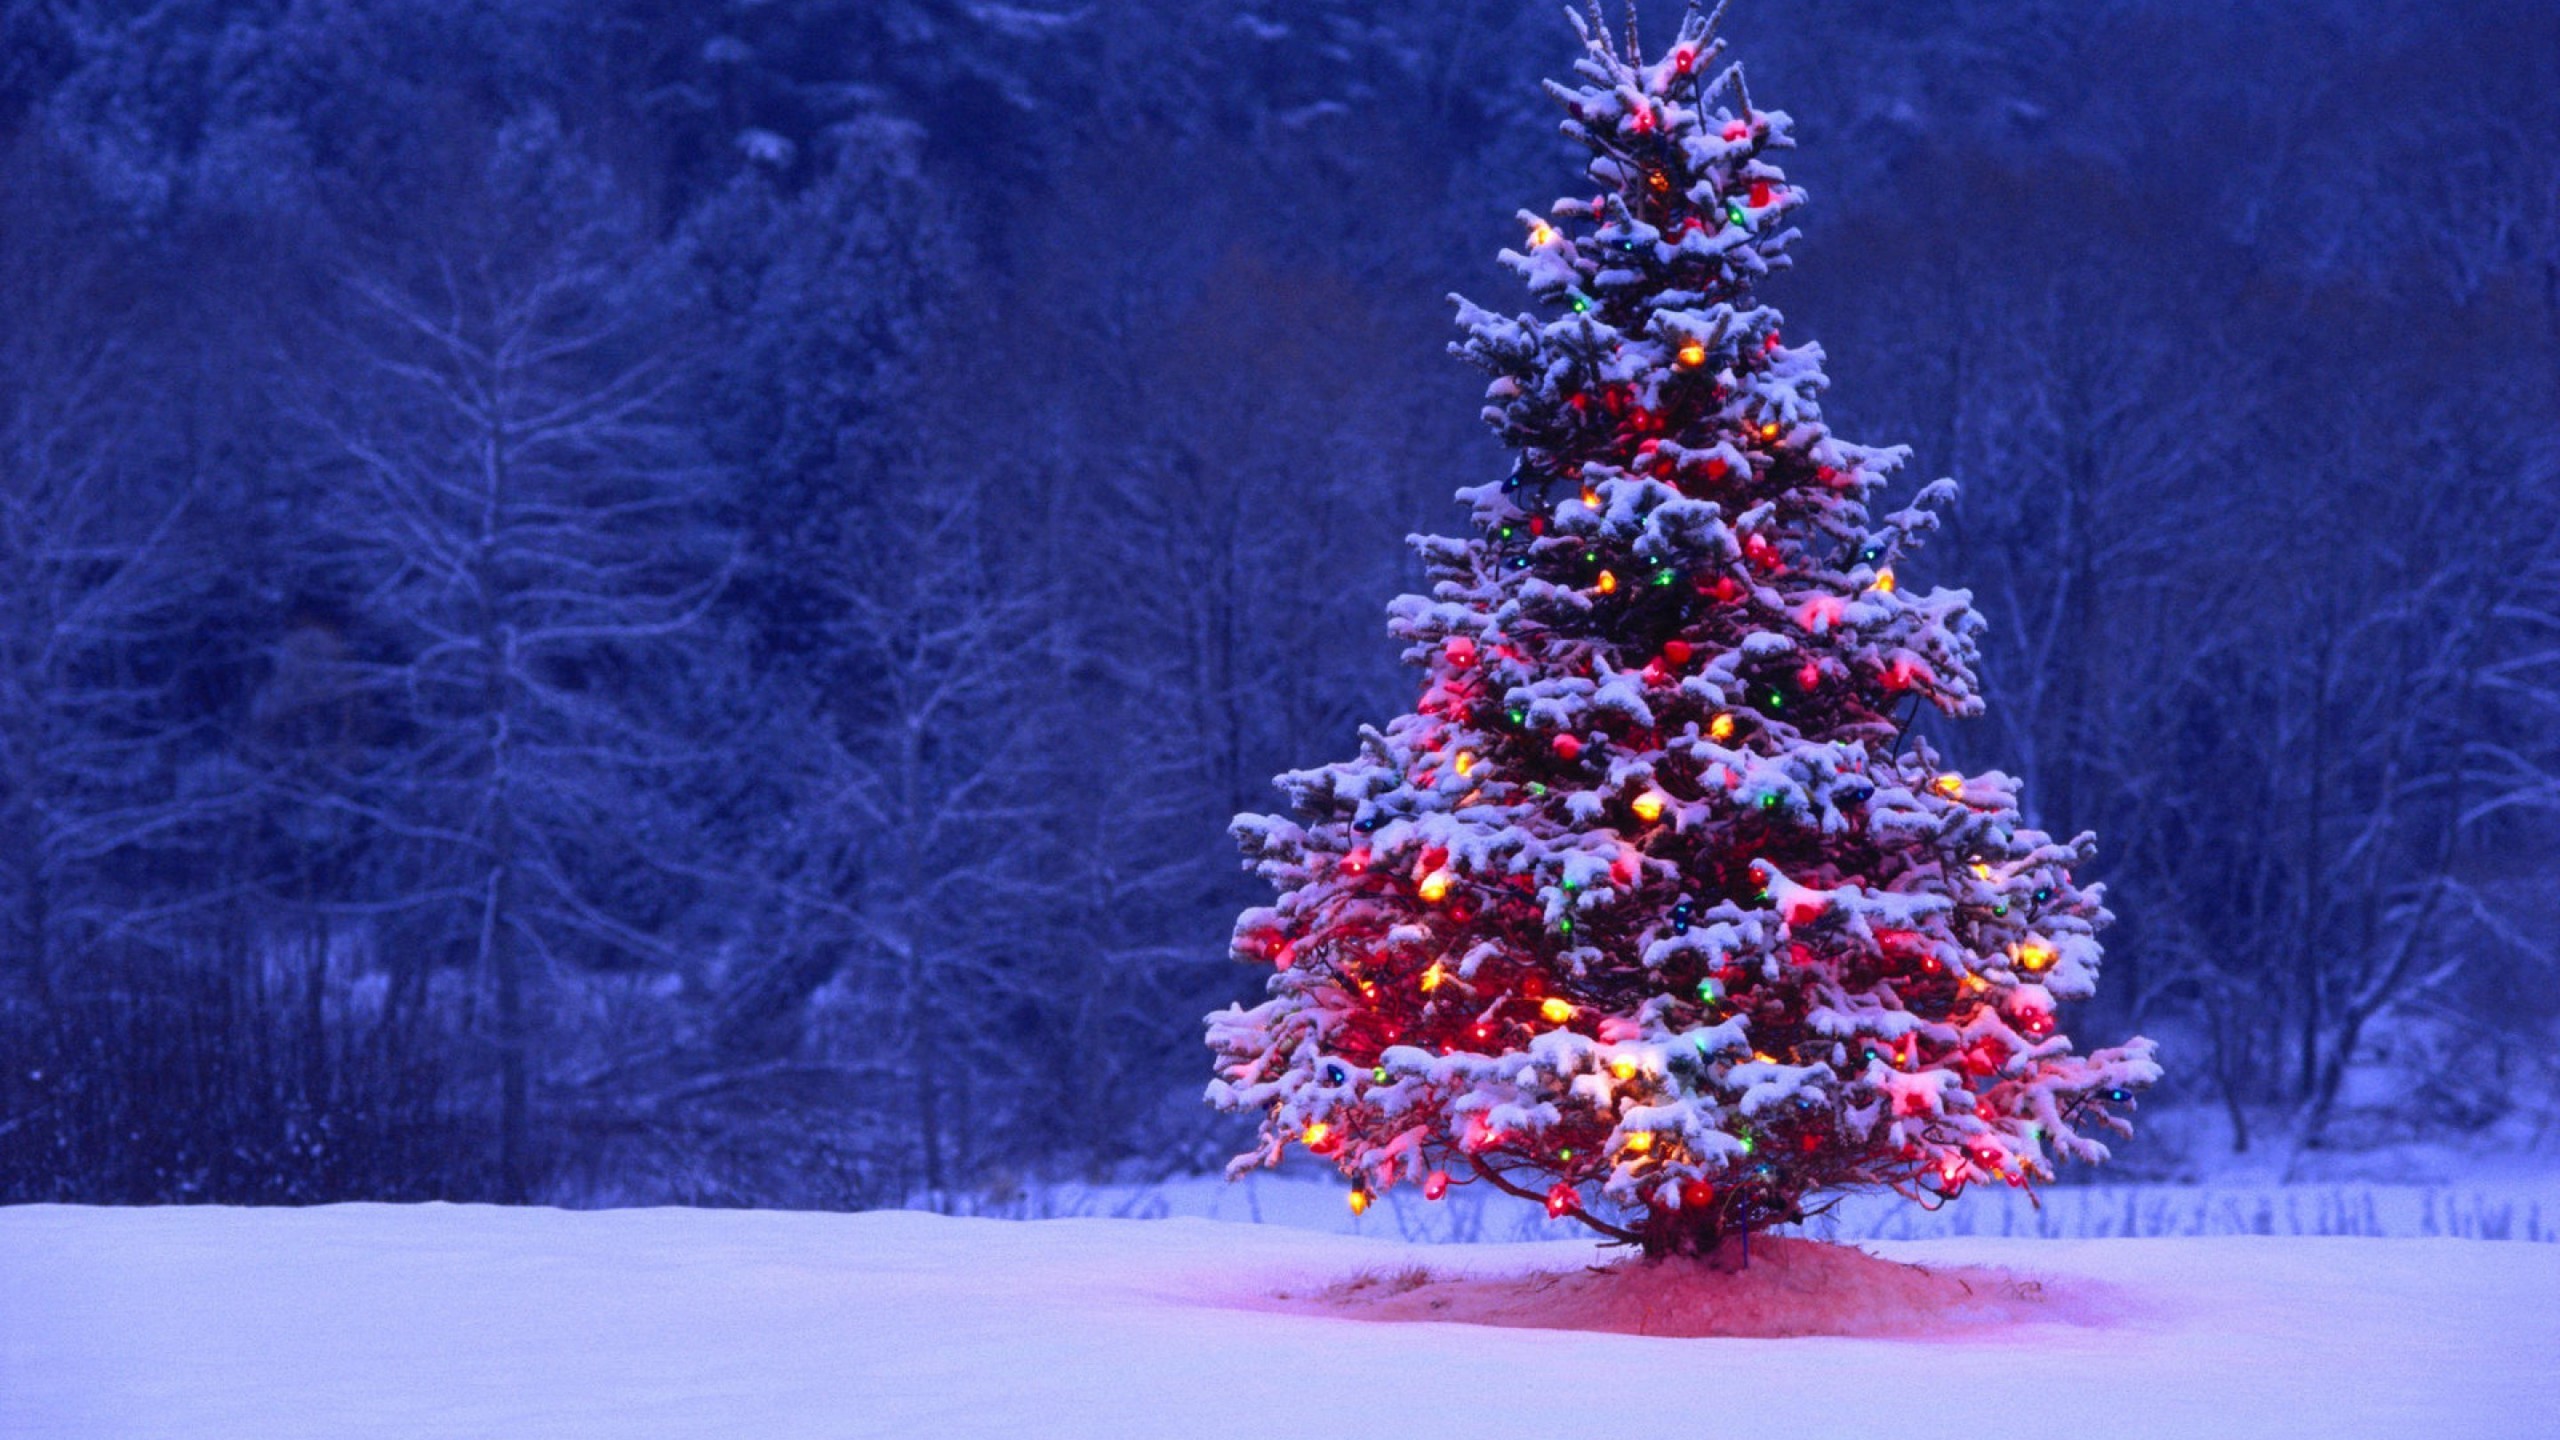 2560x1440 Christmas Tree Lights Snow Forest Holiday Desktop Wallpaper Uploaded by  DesktopWalls